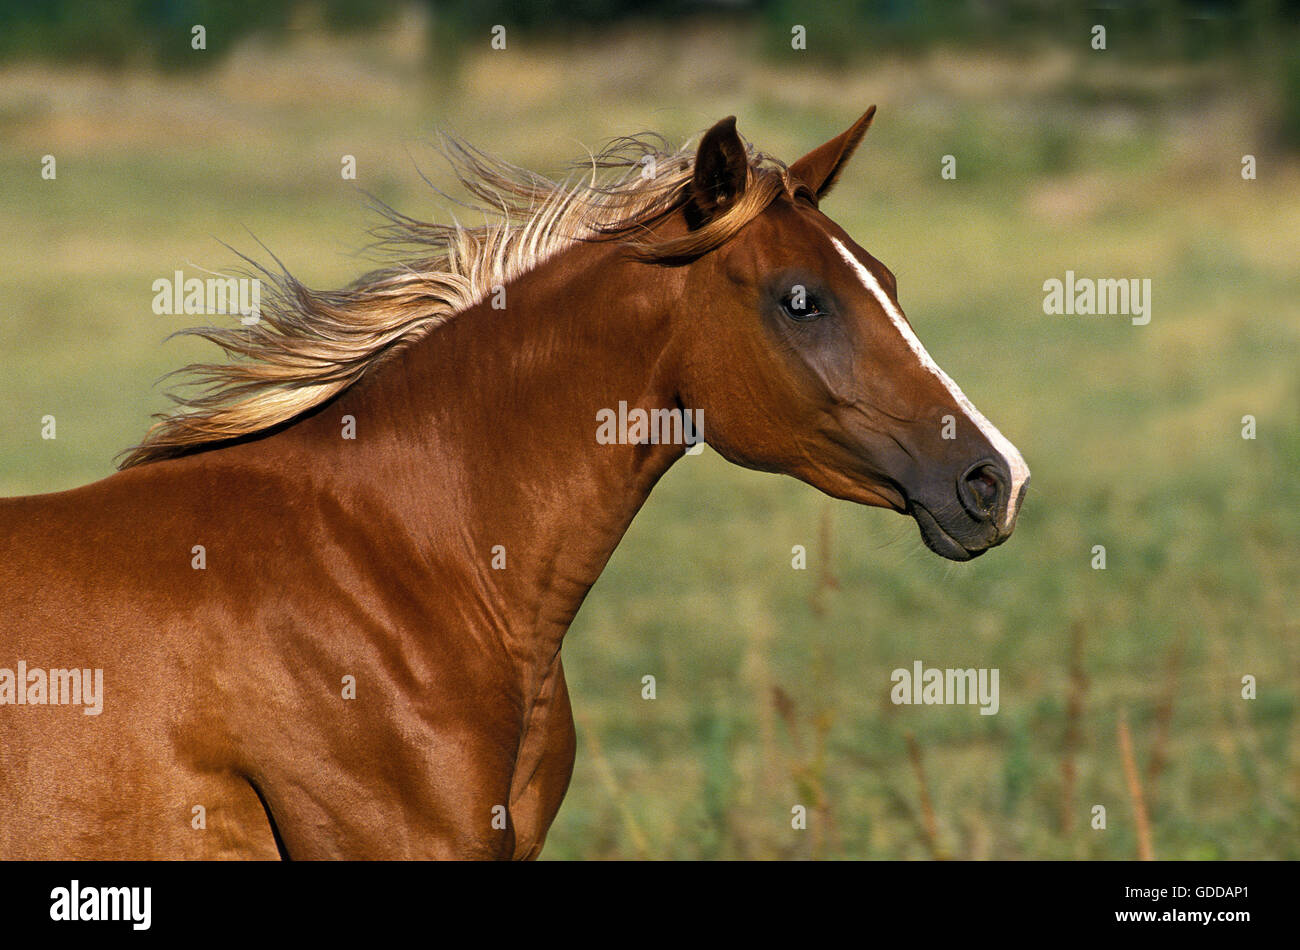 ARABIAN HORSE, PORTRAIT OF ADULT Stock Photo